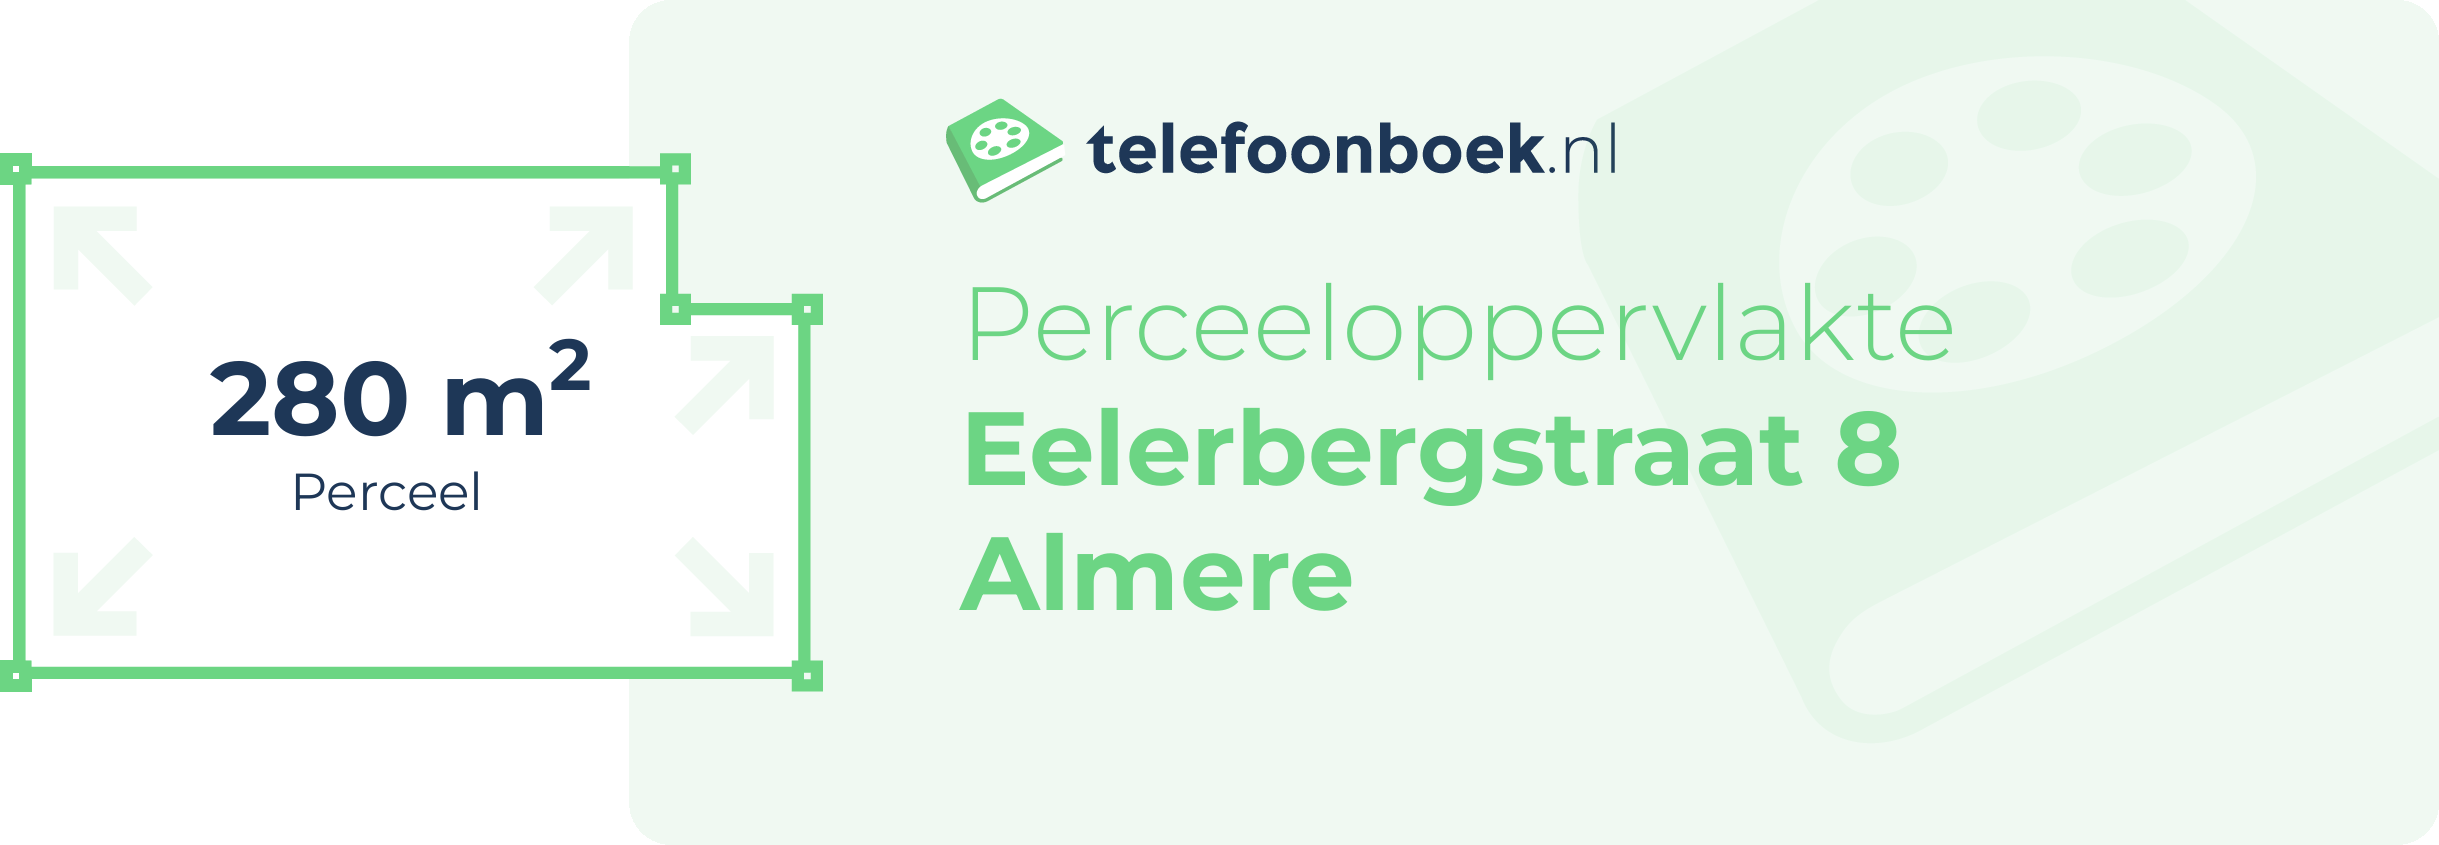 Perceeloppervlakte Eelerbergstraat 8 Almere